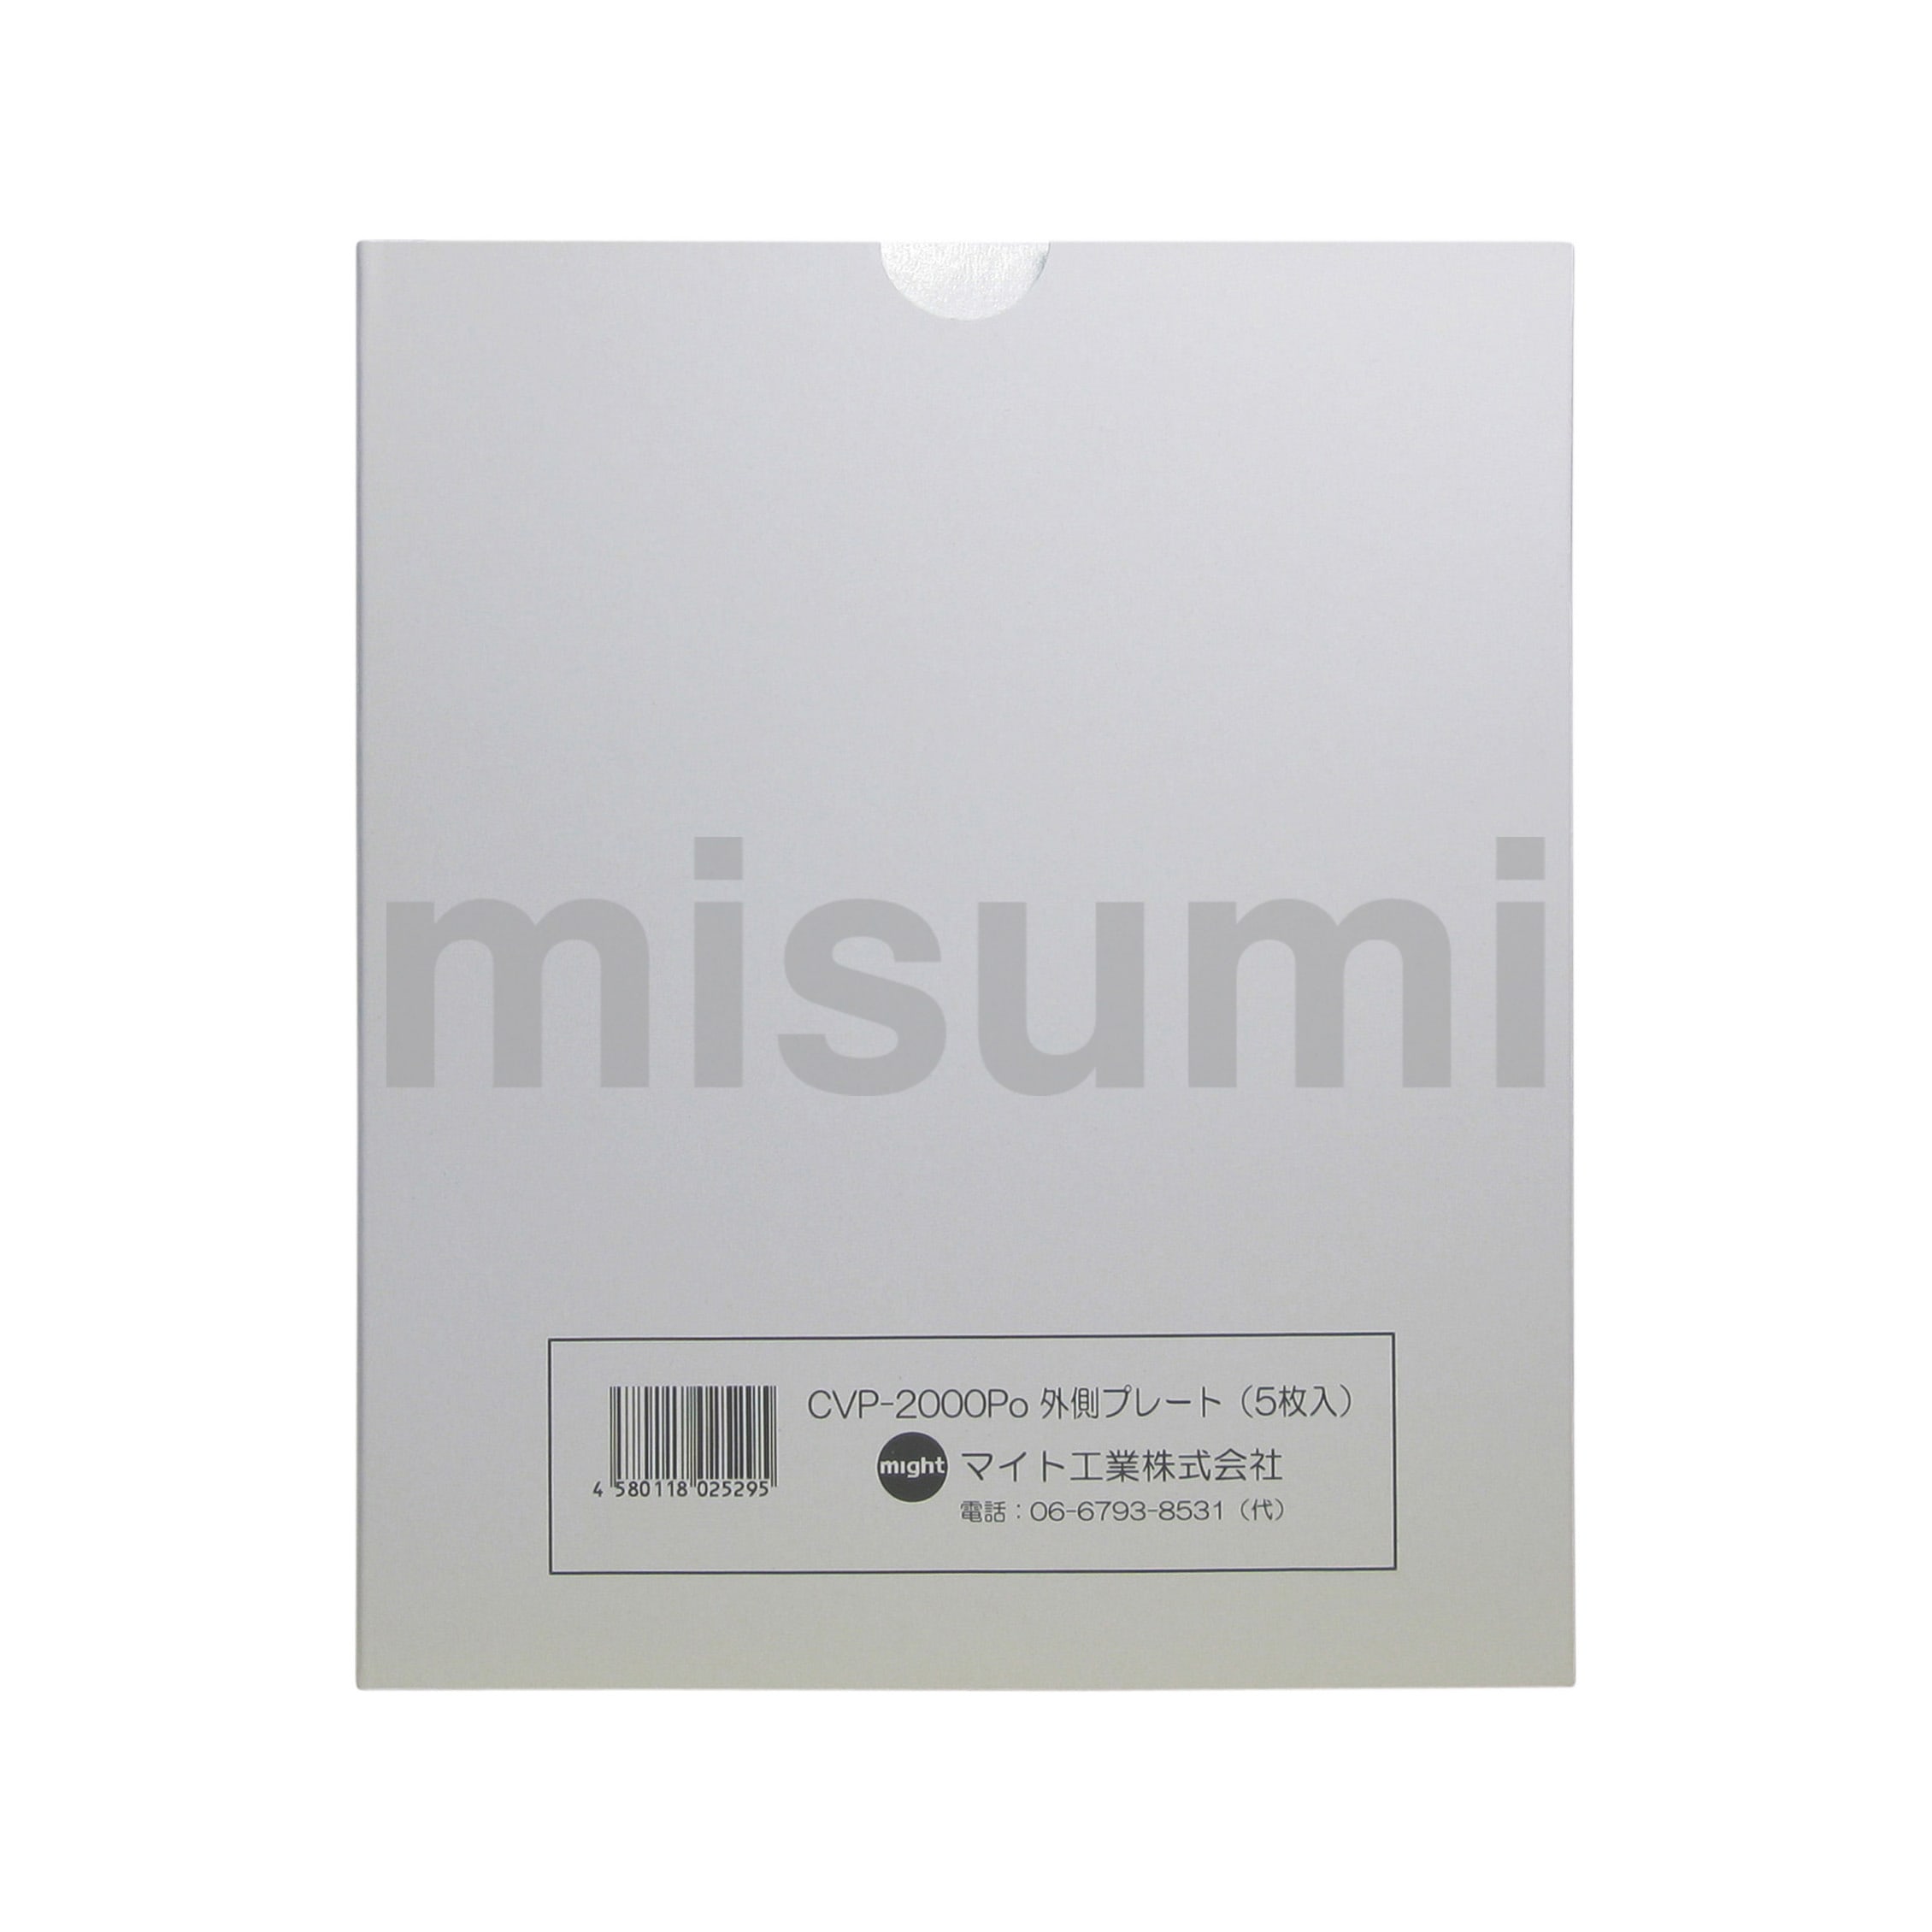 CVP-2000PO 溶接面 レインボーマスクシリーズ用カバープレート マイト工業 MISUMI(ミスミ)